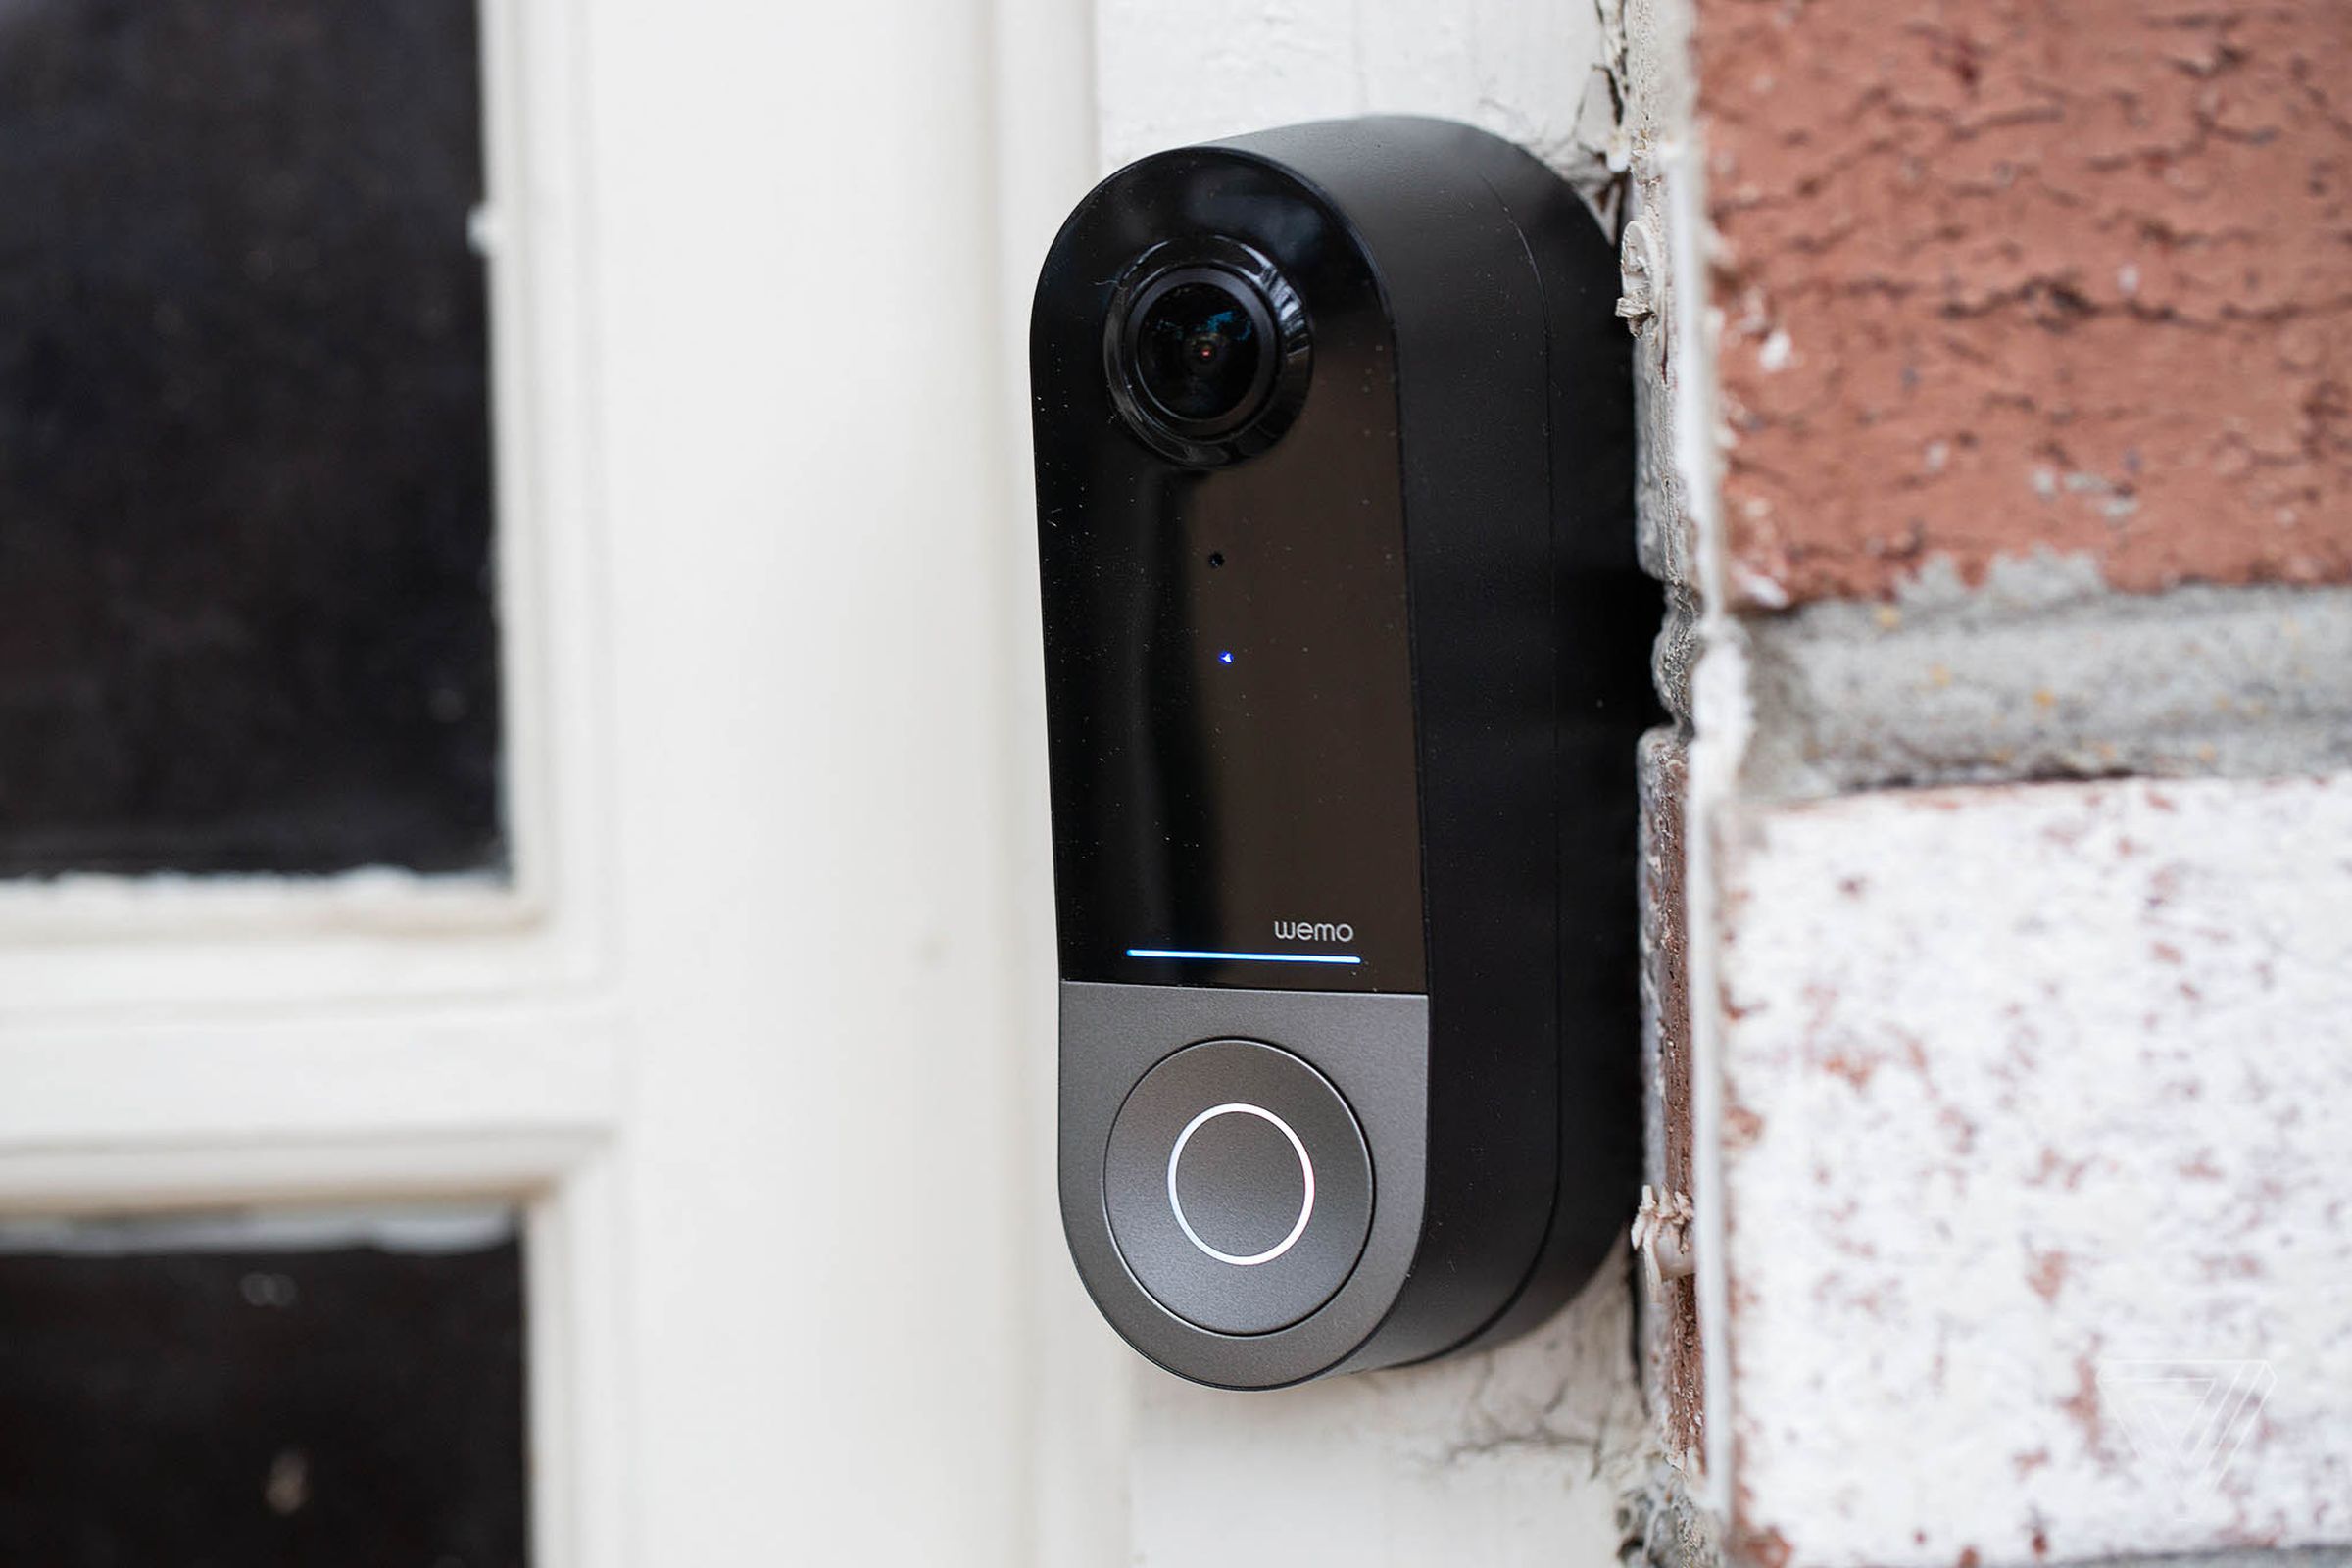 The Wemo doorbell has a simple, modern design.